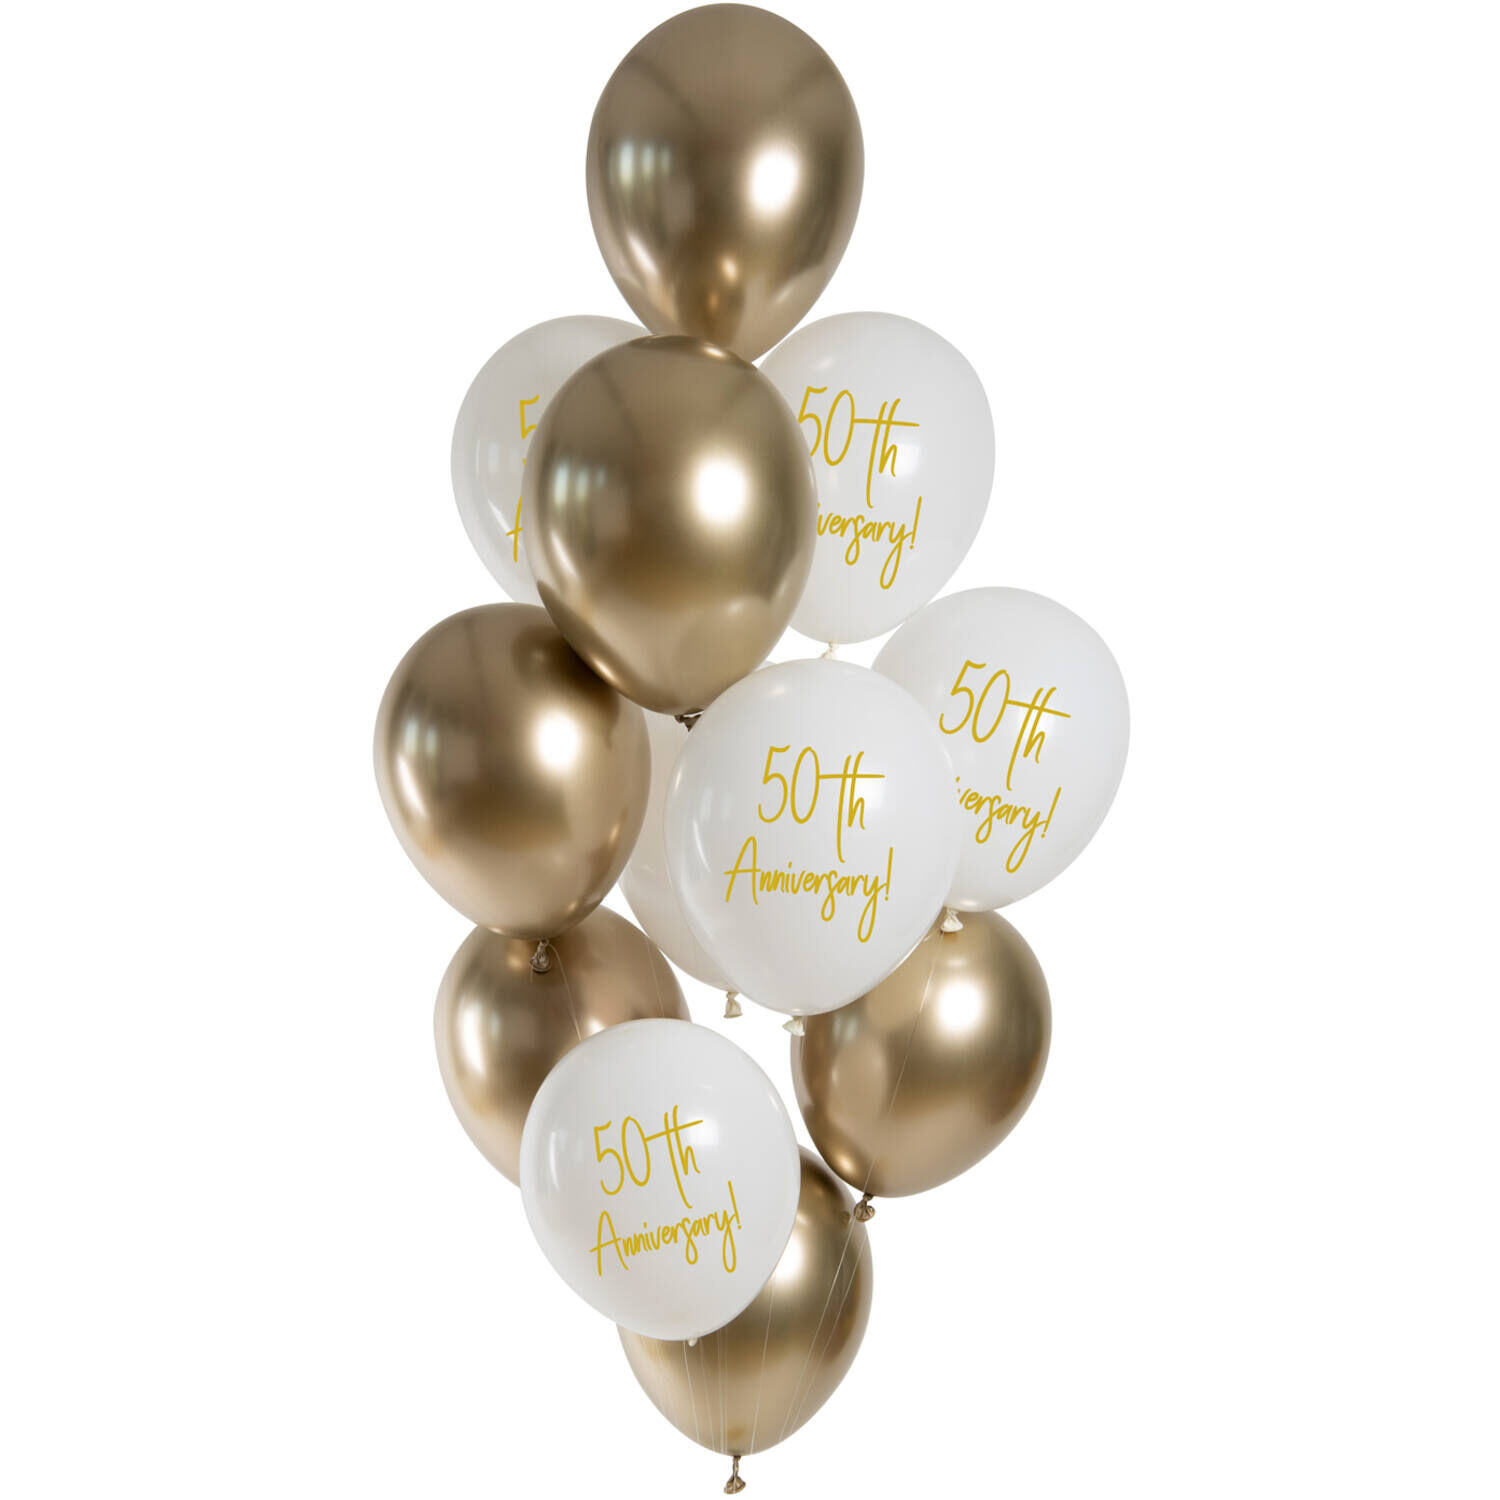 NEU Premium-Latex-Luftballons 50th Anniversary, Golden, 33cm, 12 Stk.